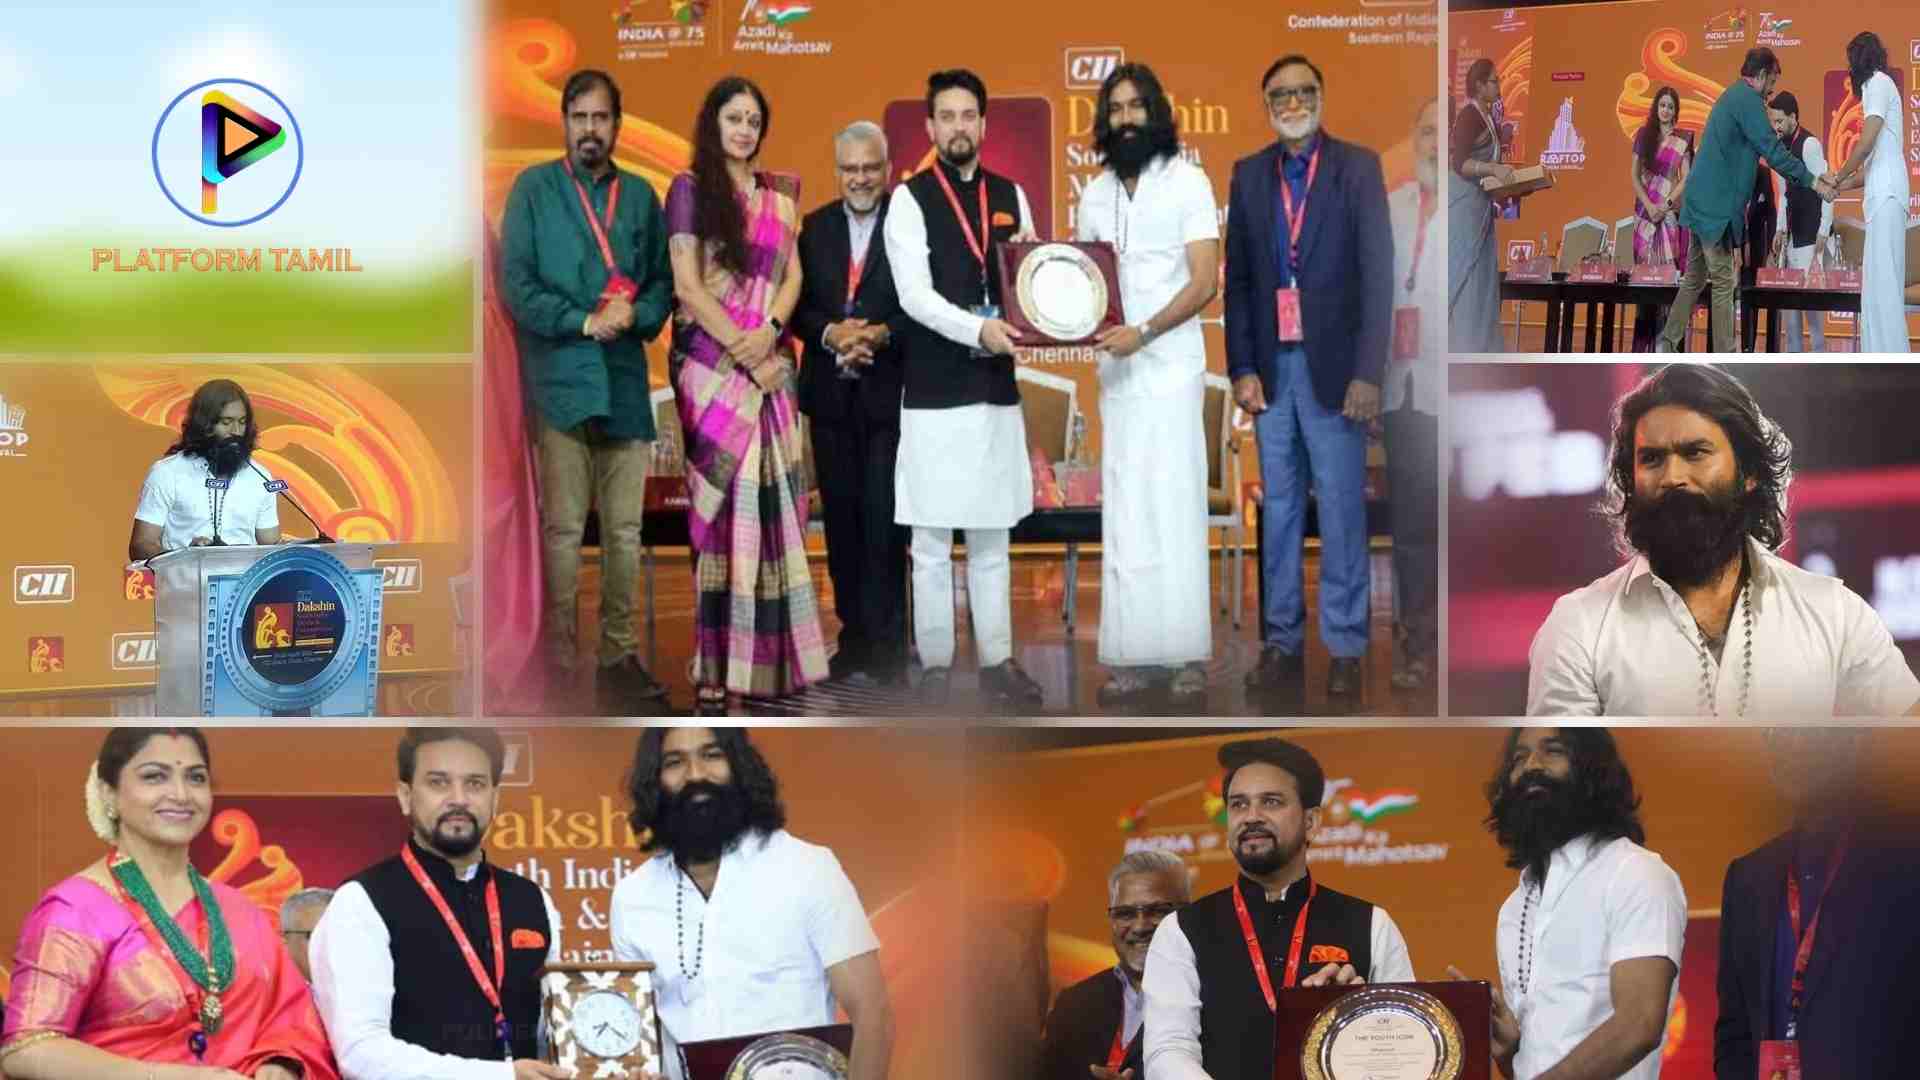 Dhanush Getting Youth Icon Awards - Platform Tamil